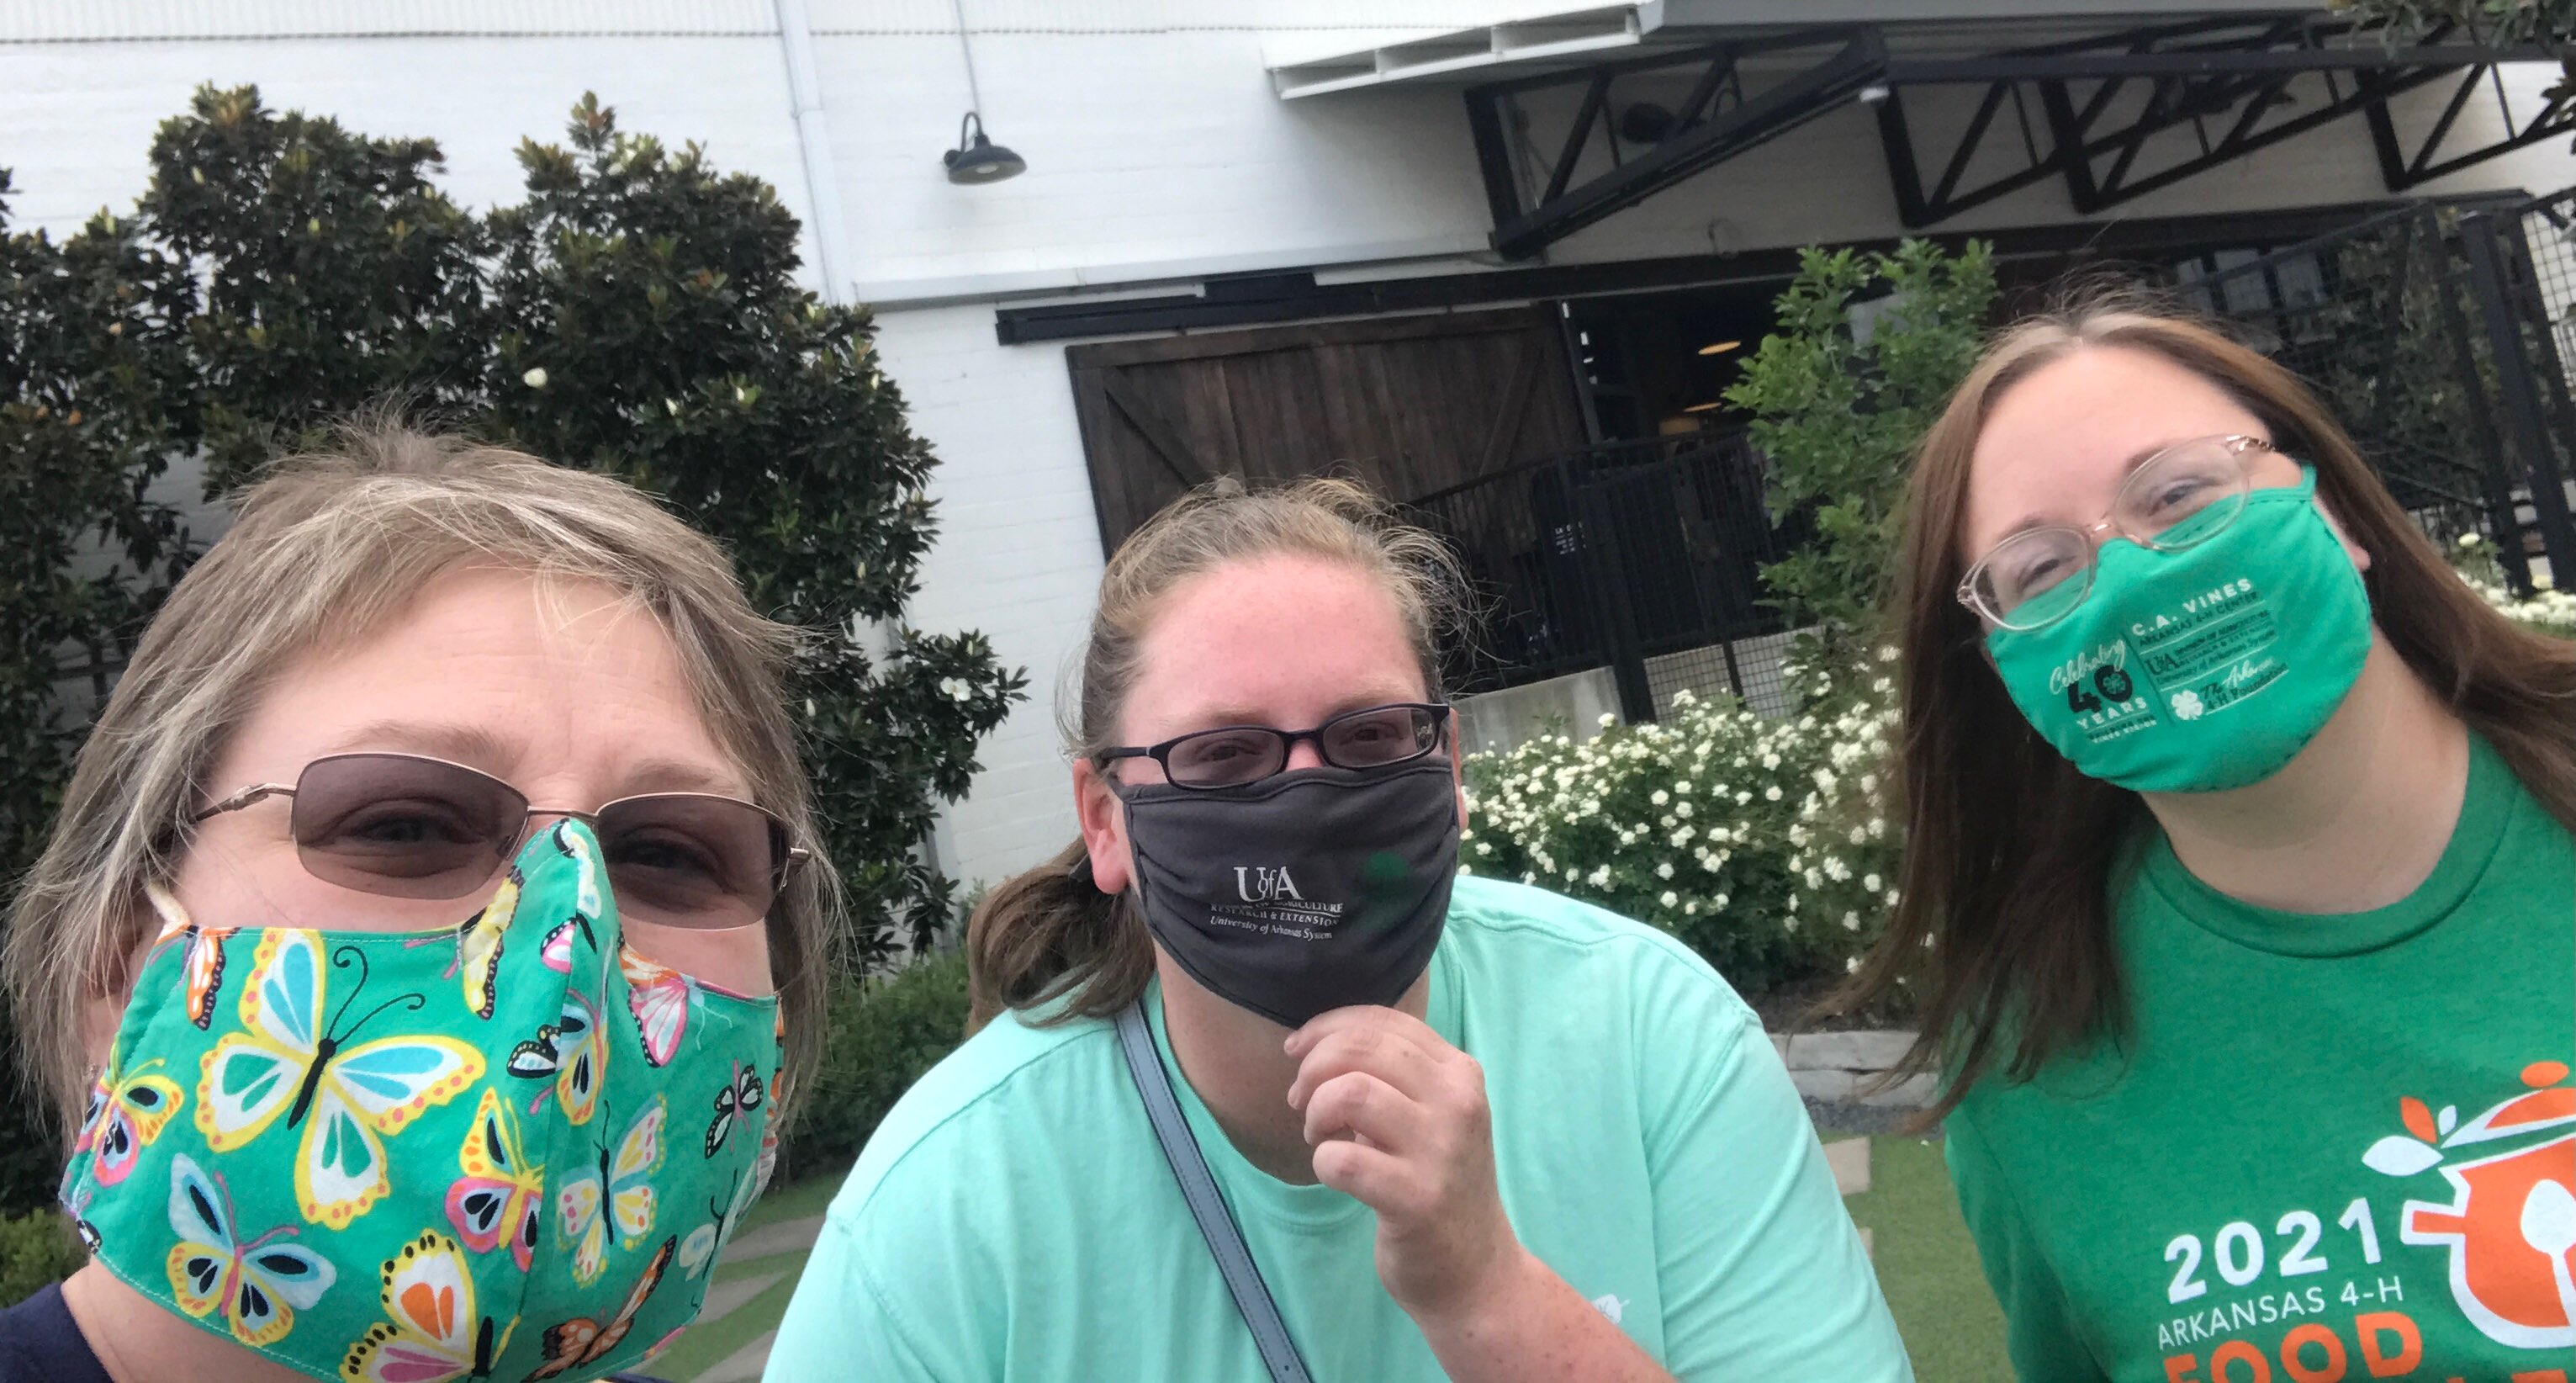 Three women posing together while wearing masks